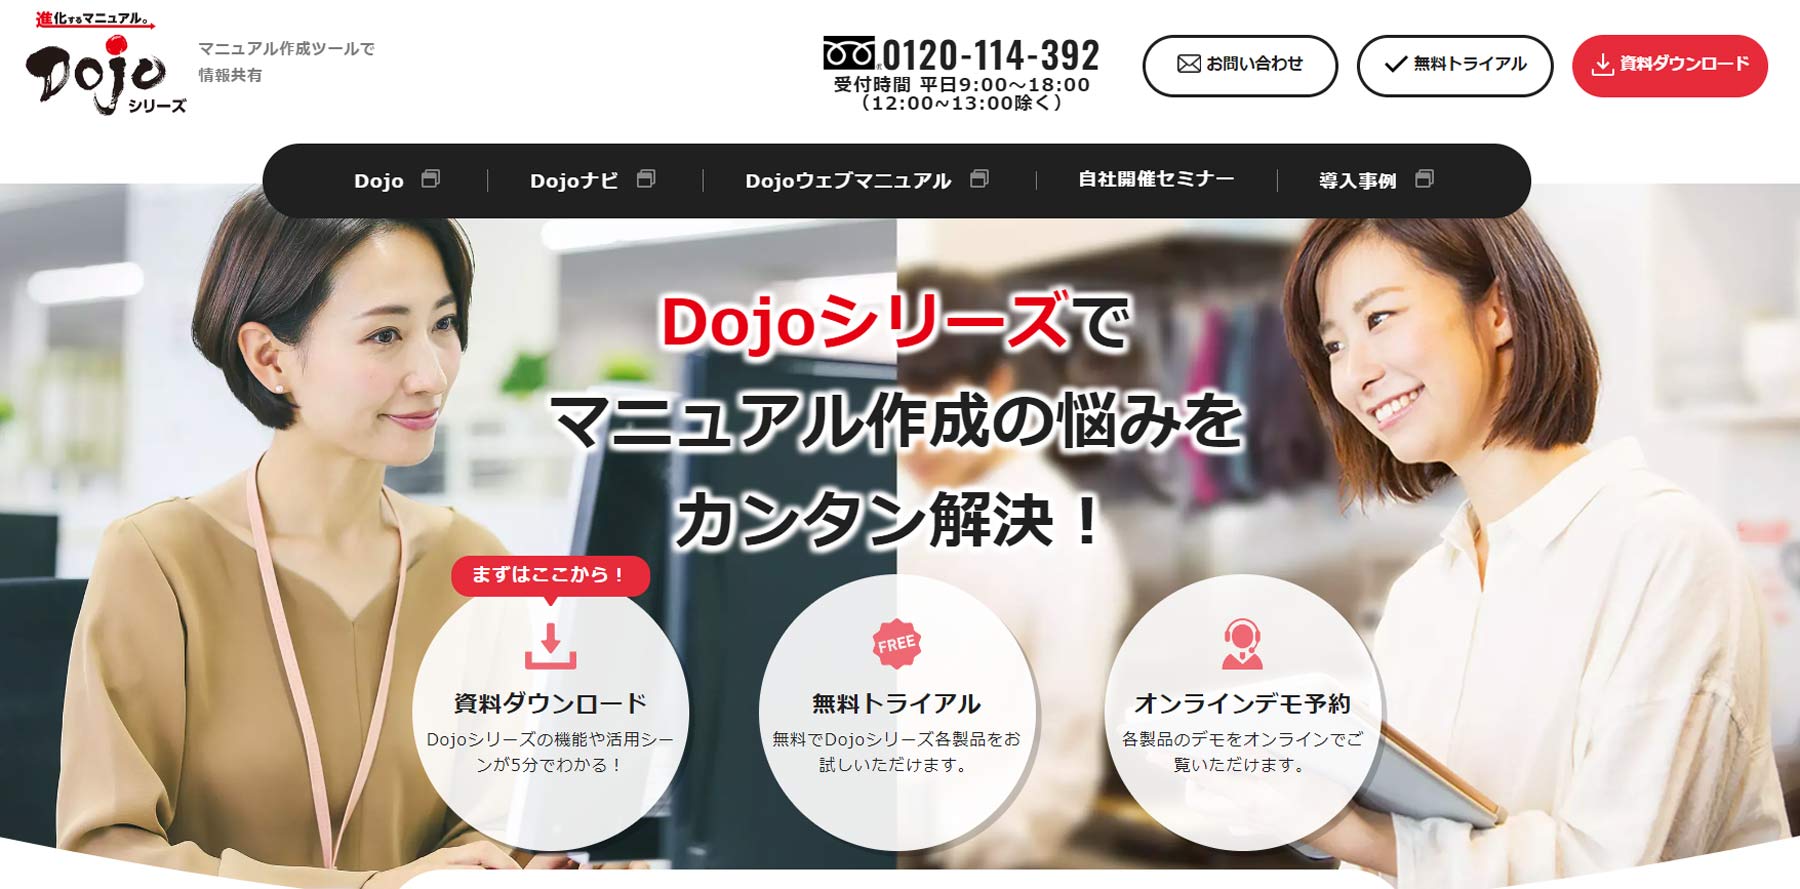 Dojo公式Webサイト